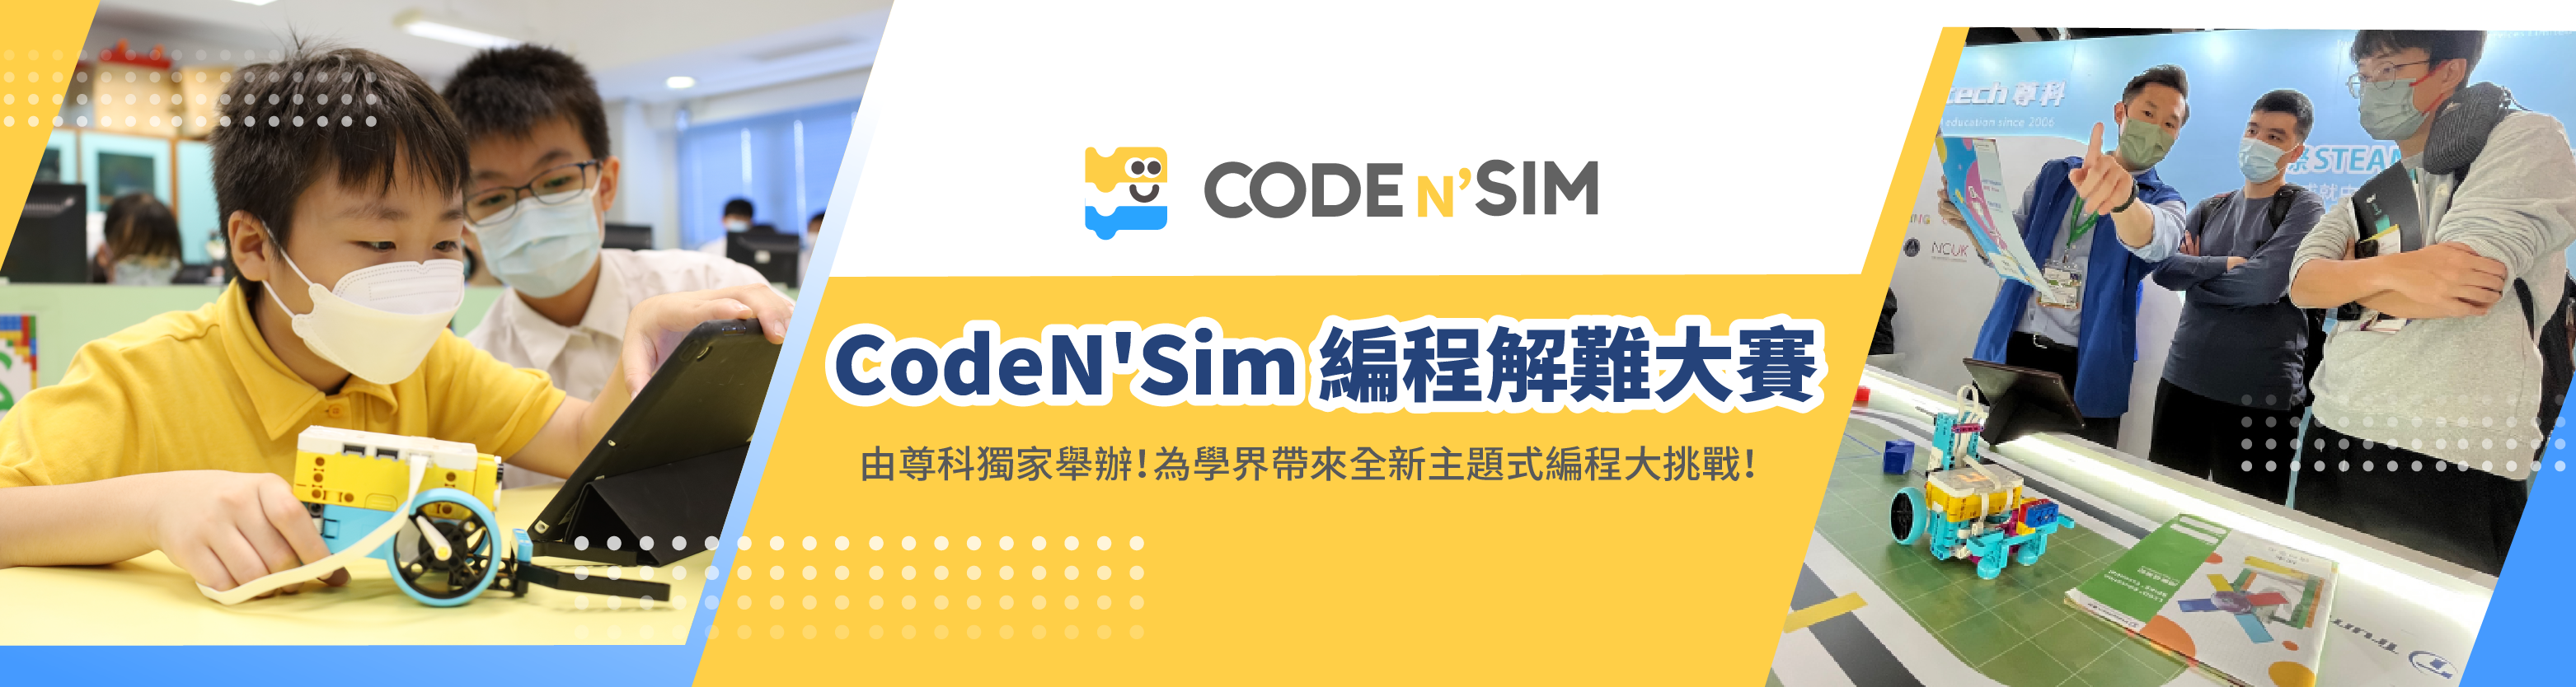 CodeN'Sim 編程解難大賽